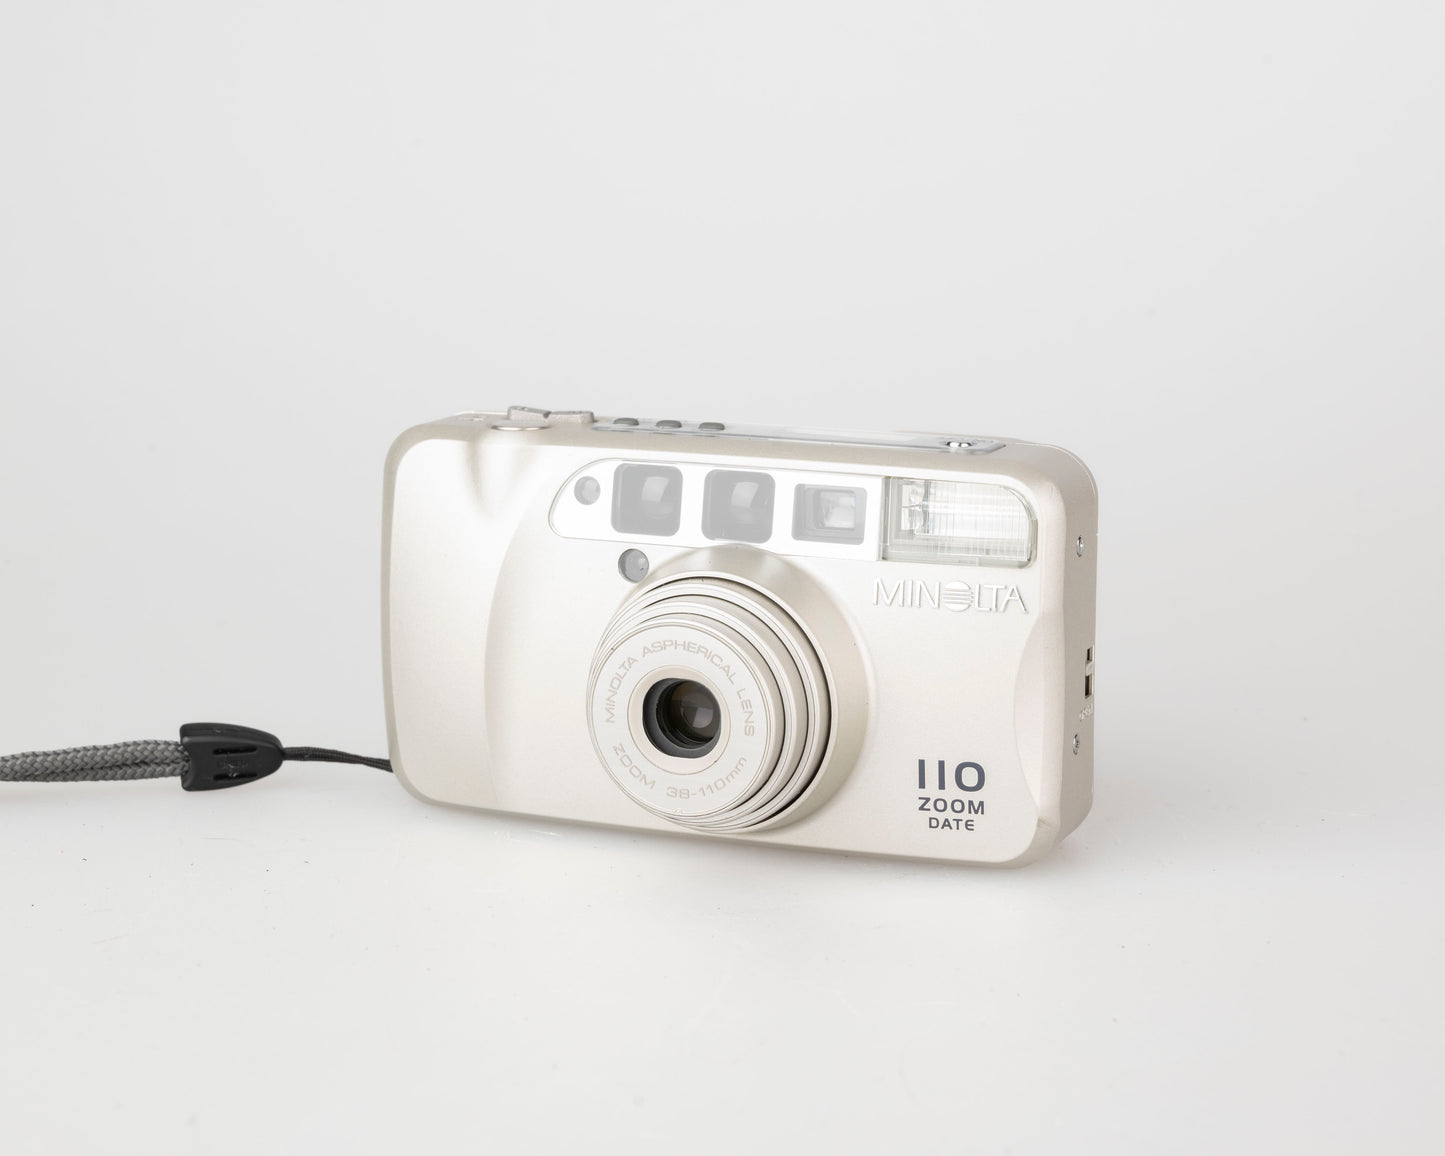 Minolta 110 Zoom Date compact 35mm camera w/ case (serial 42312807)